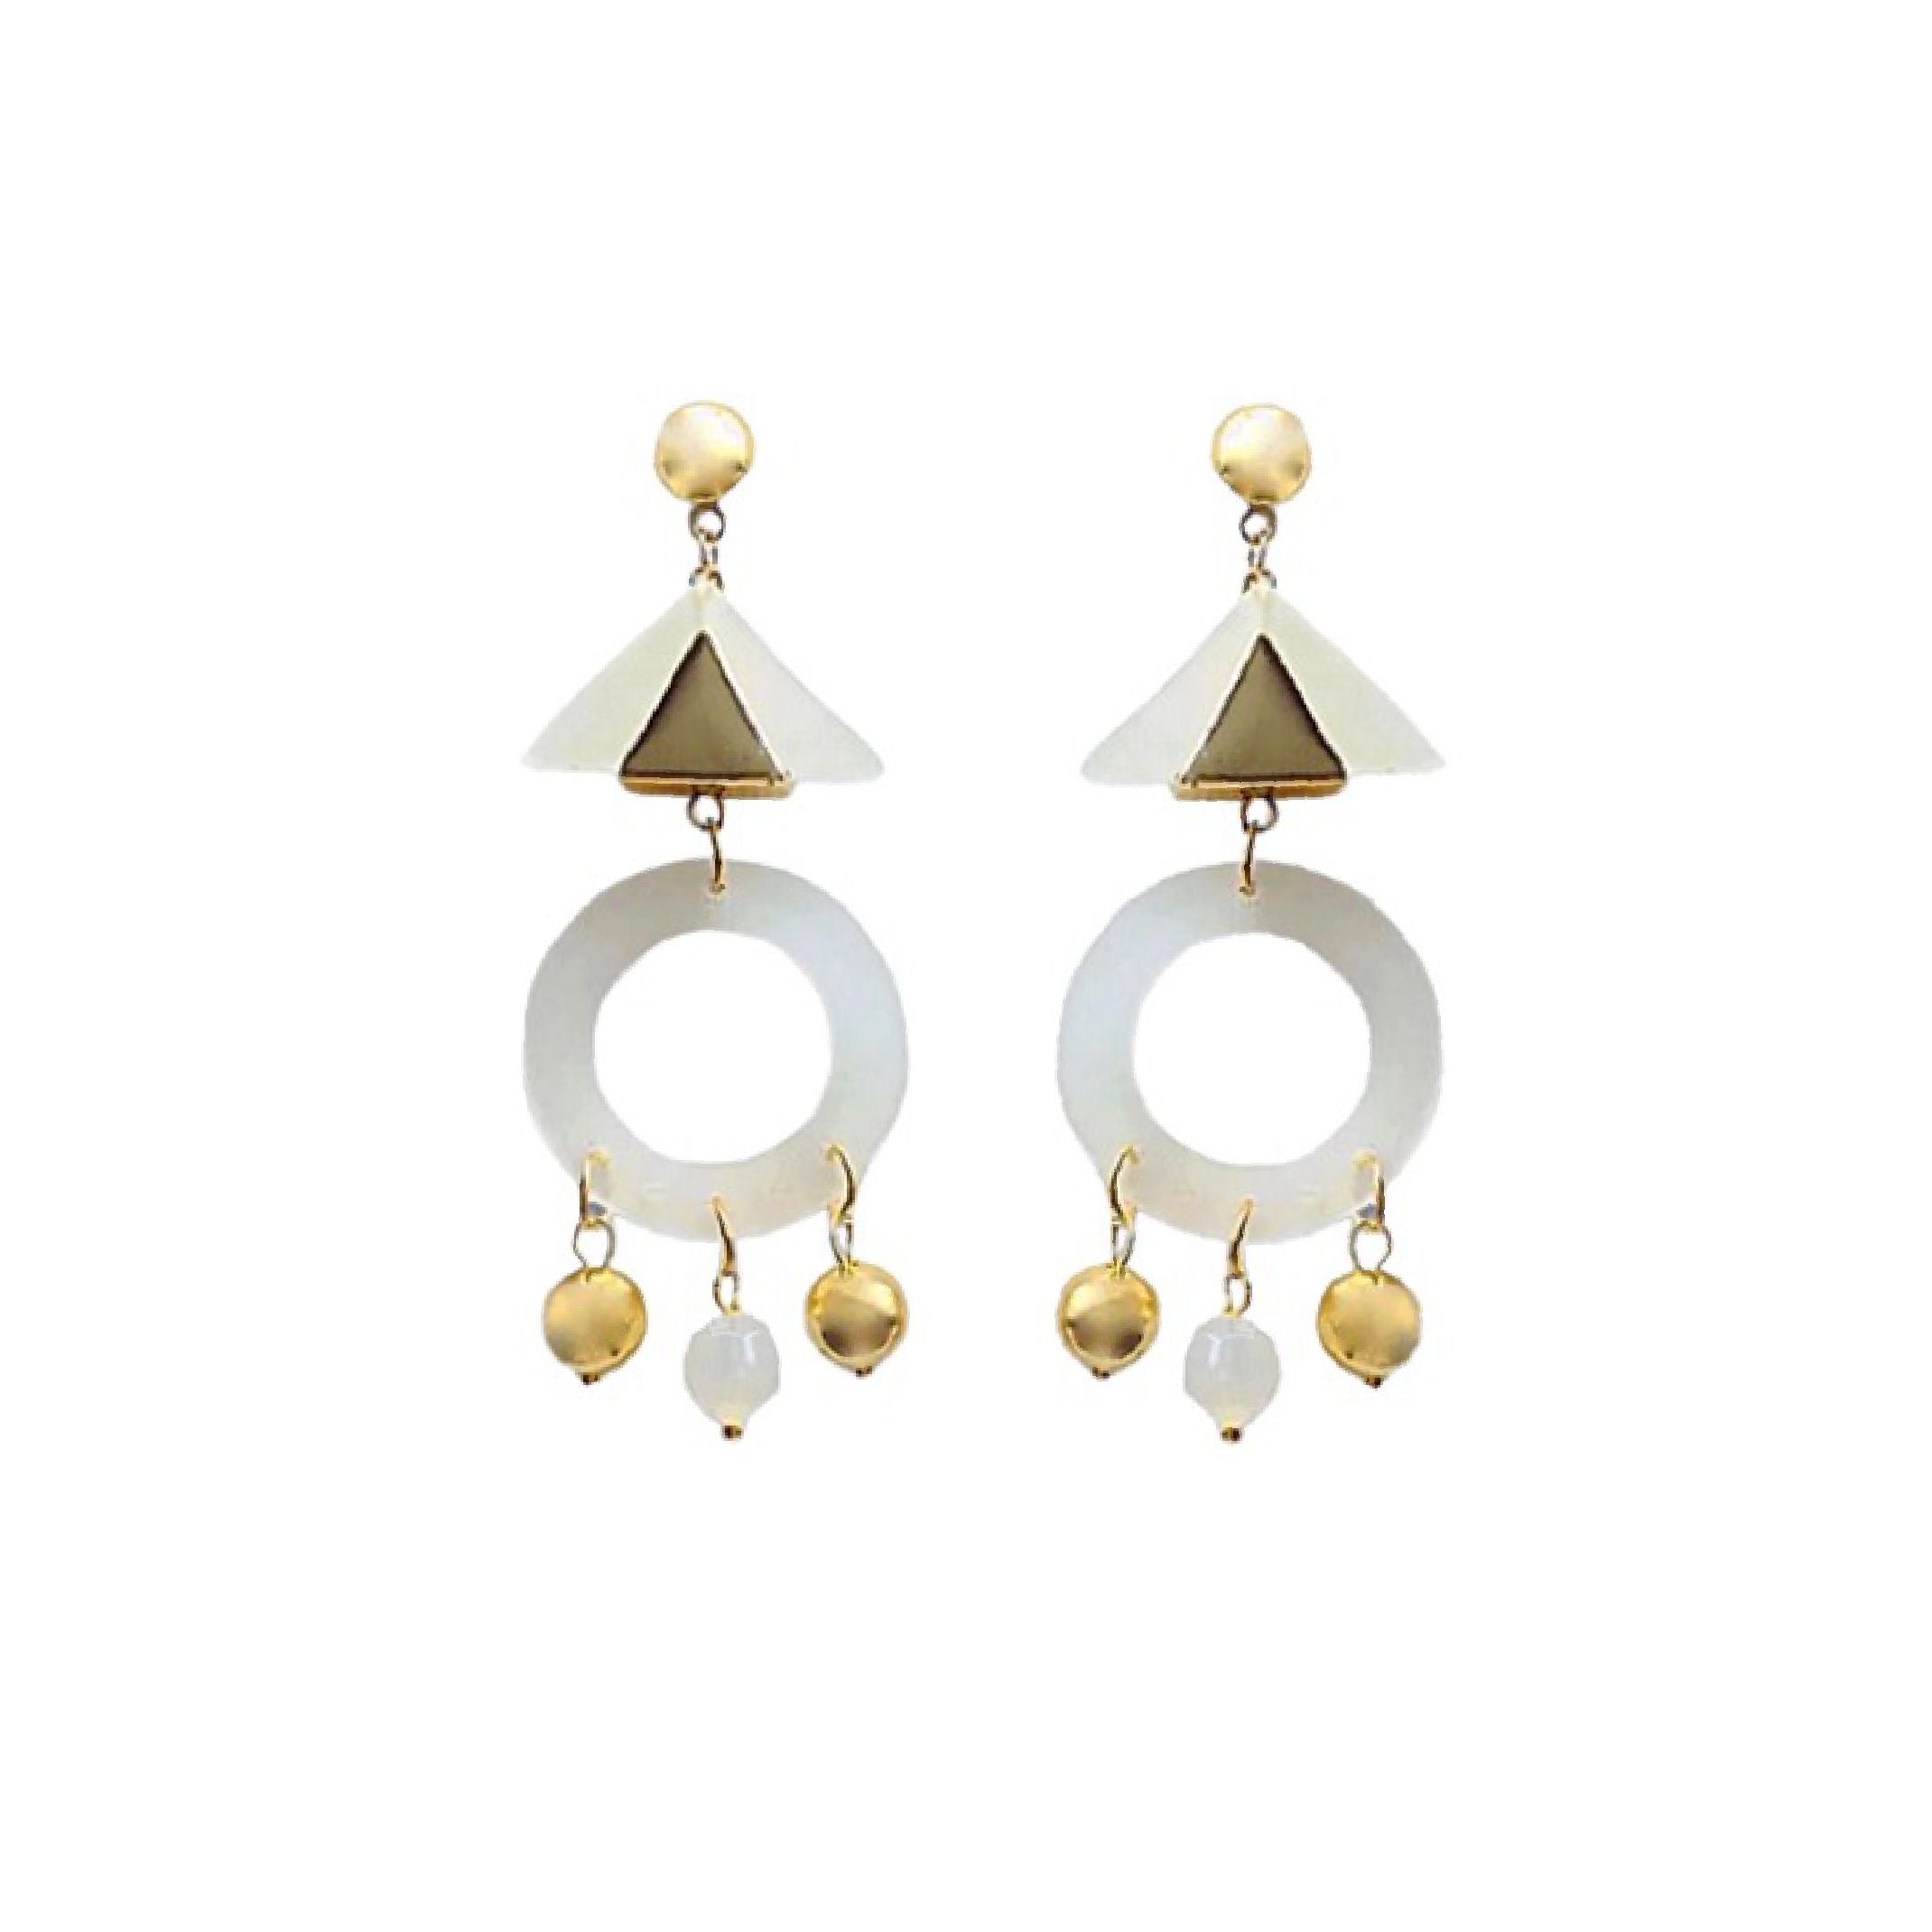 Carousel earrings 